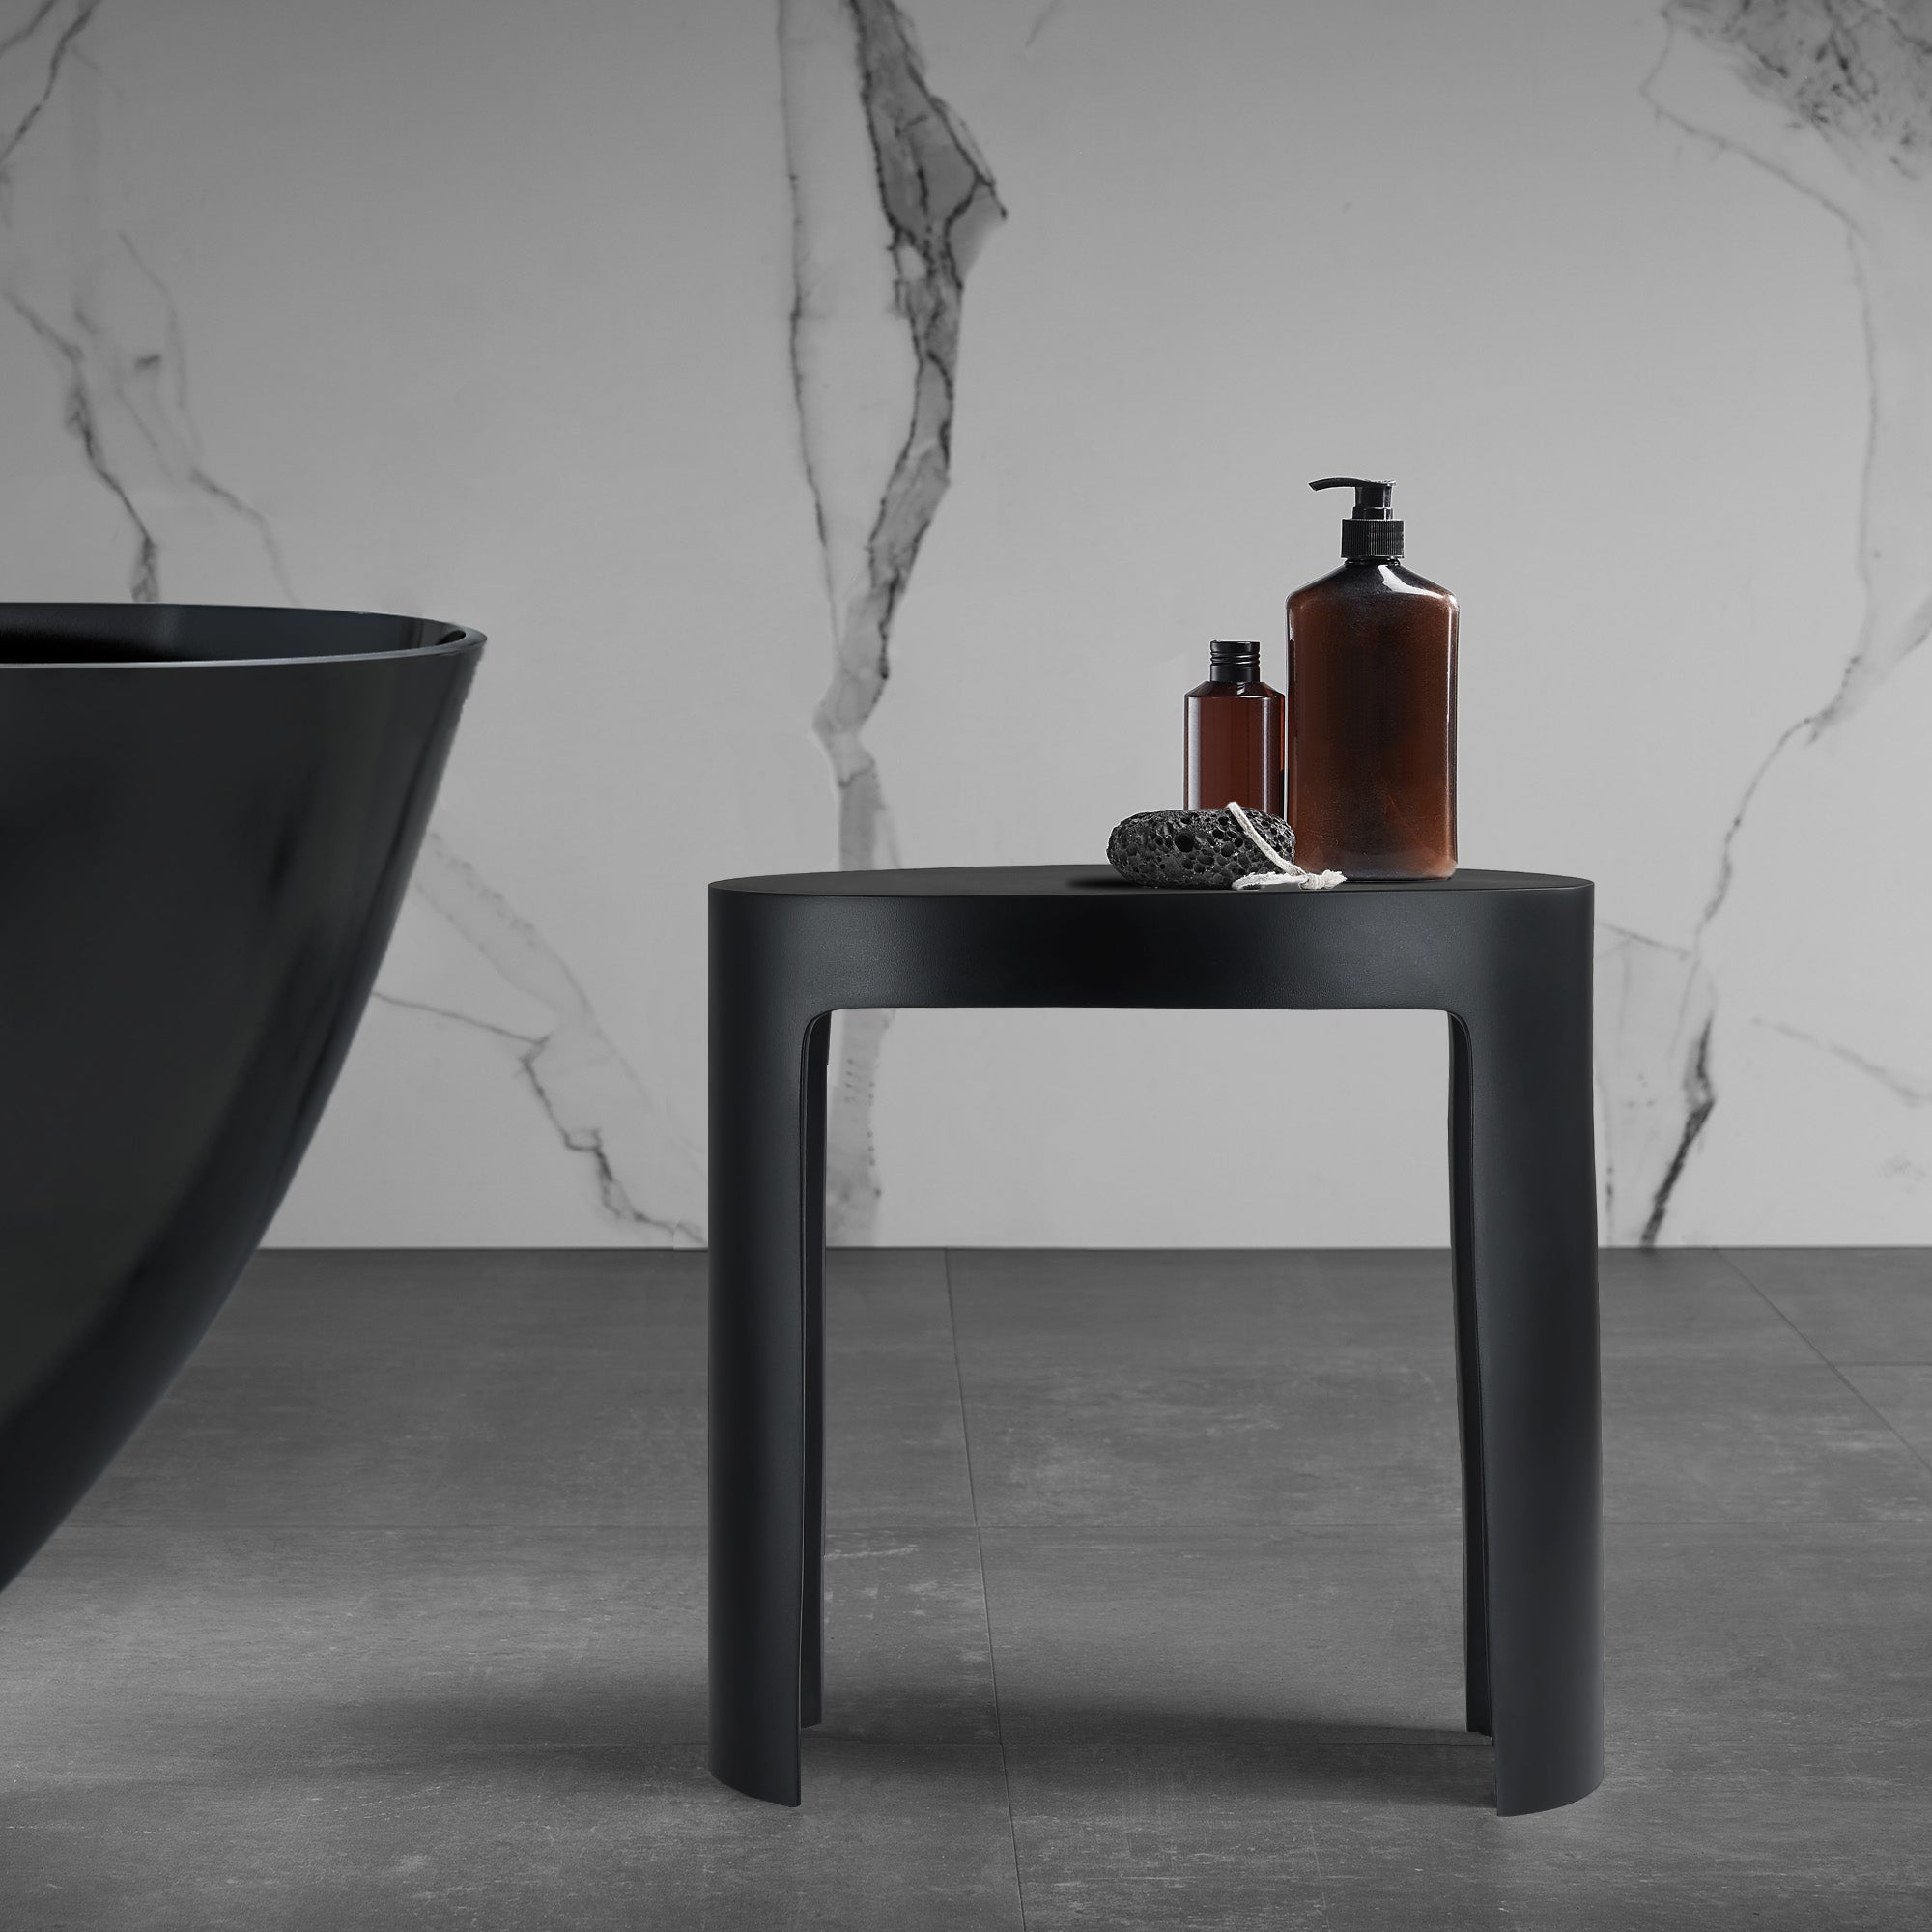 Ancona 17” Pure Acrylic Stone Bathroom Shower Bench in Matte Black